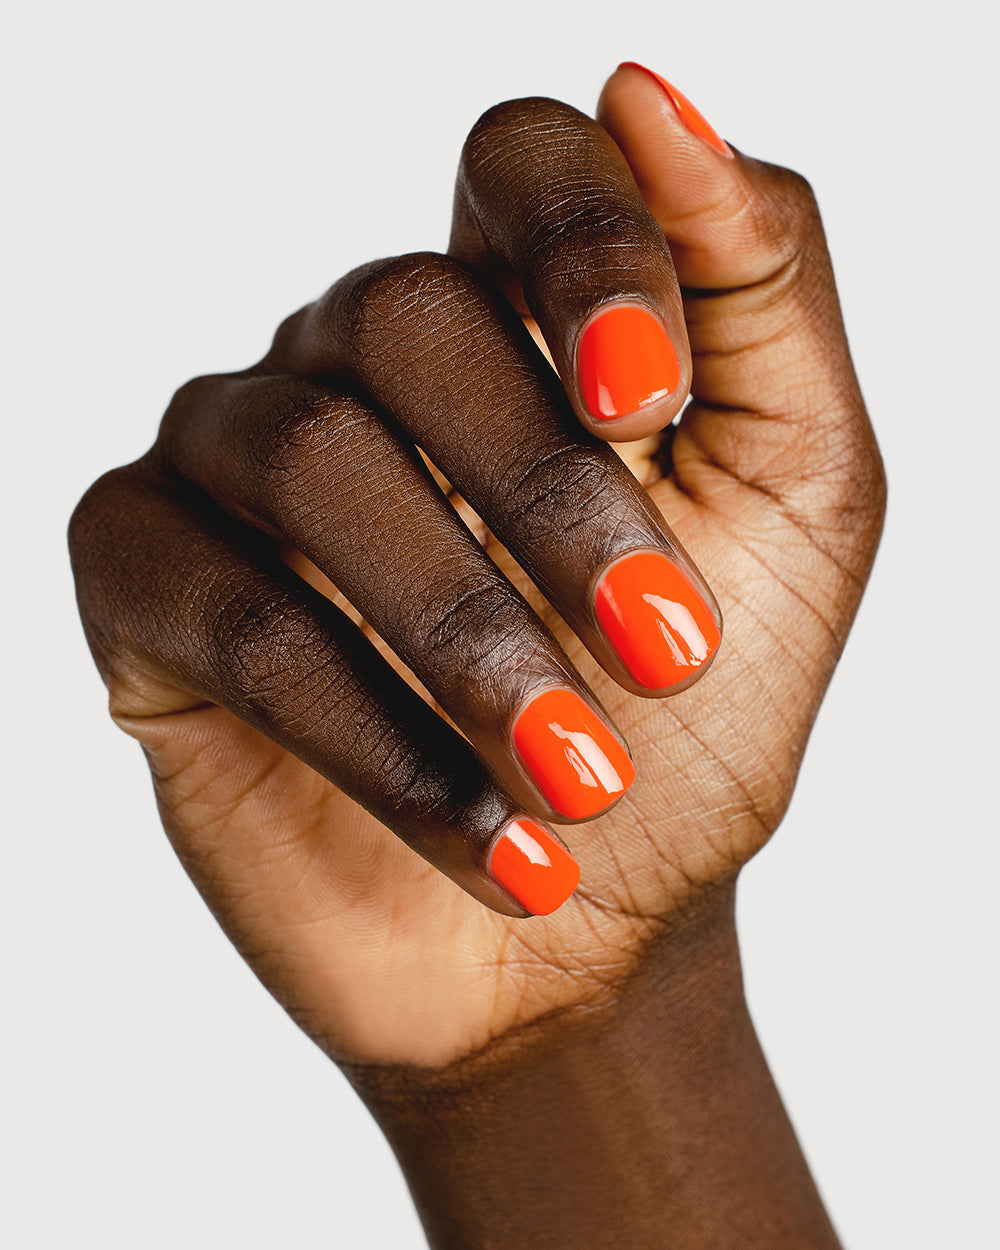 Tangerine nail polish hand swatch on dark skin tone